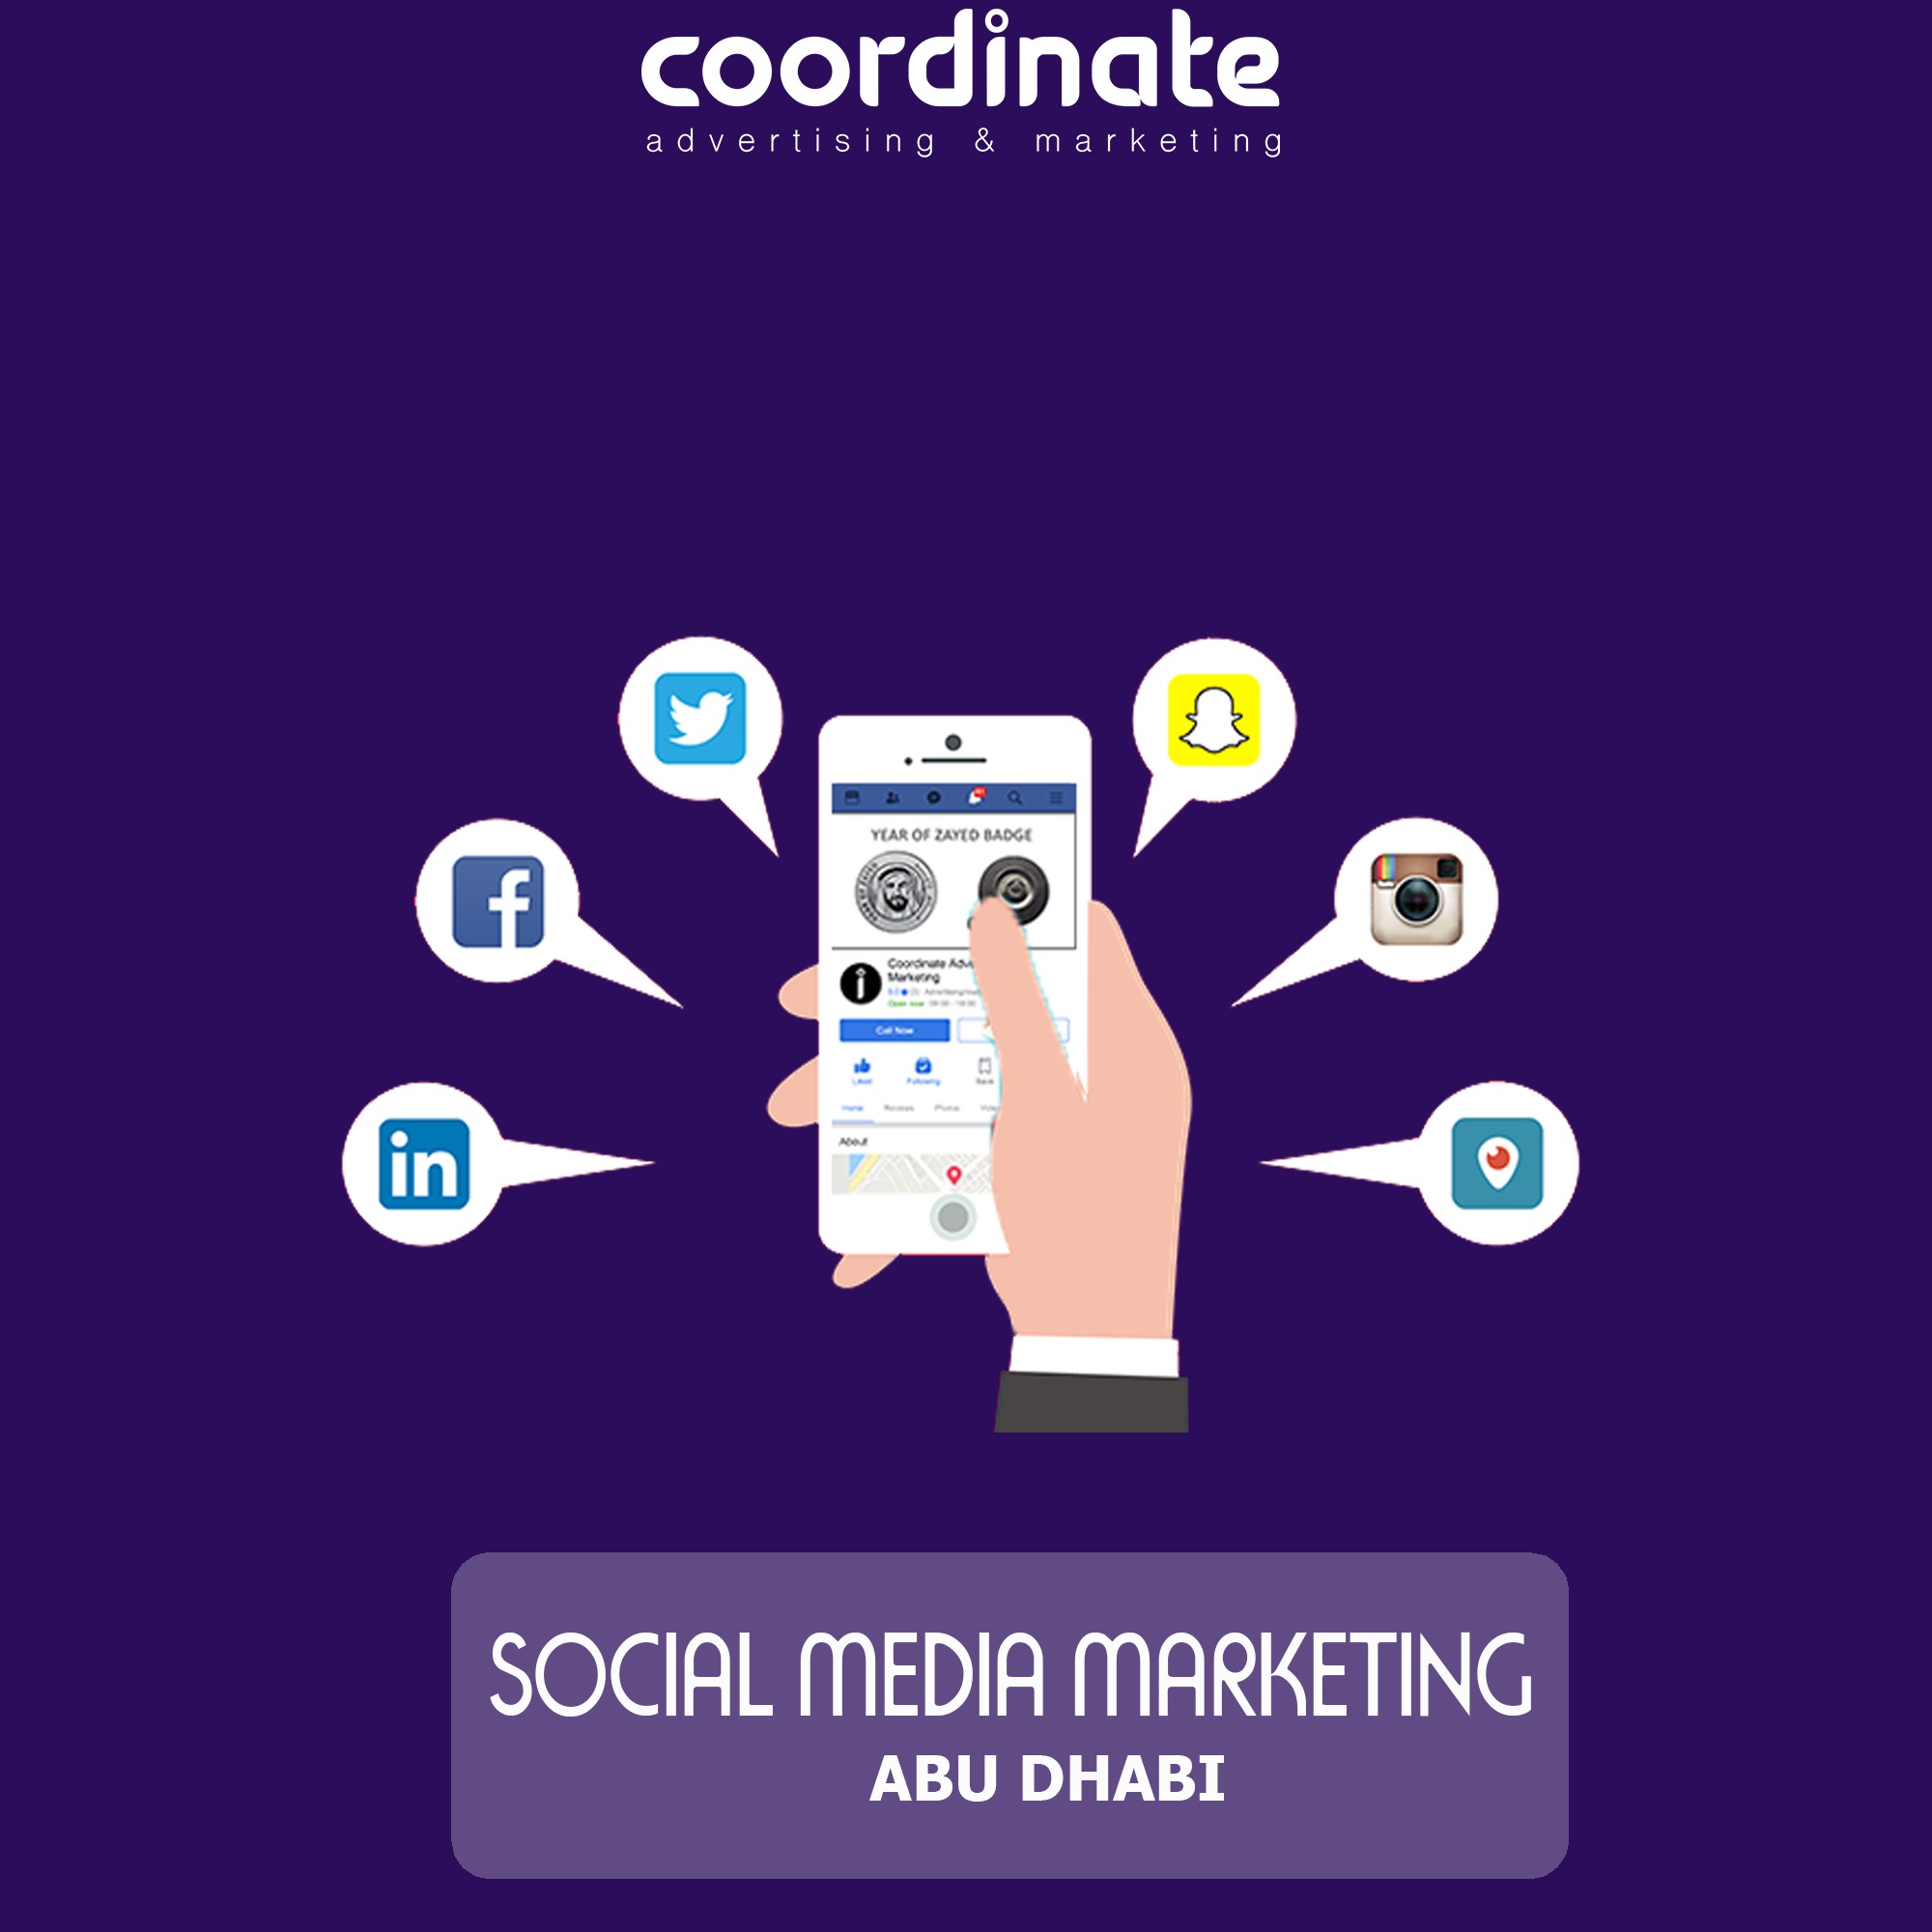 Social Media Marketing Abu Dhabii | Coordinate advertising and marketing agency